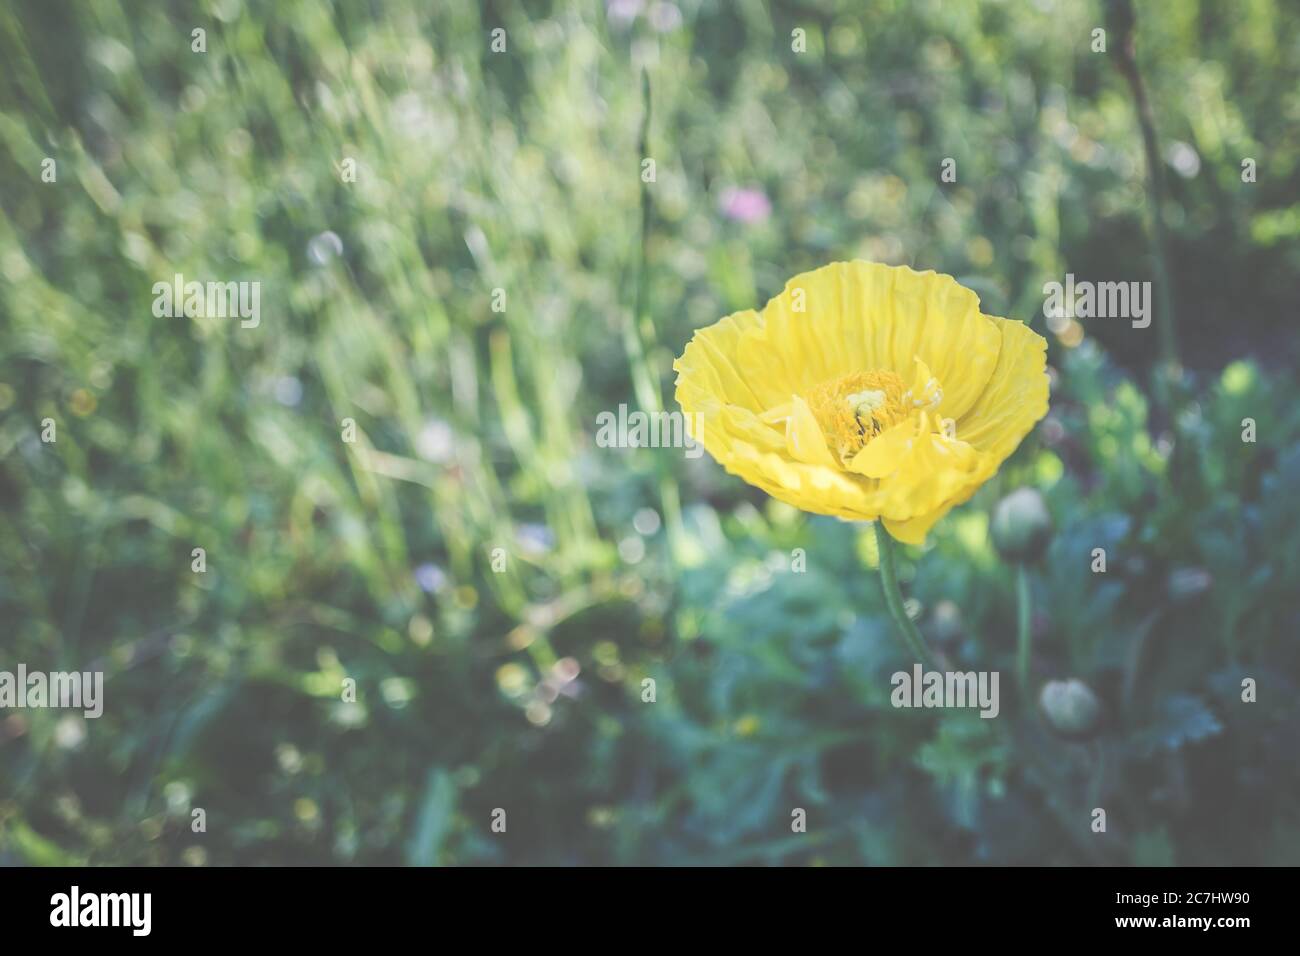 Spring - The garden blooms in the sunlight, yellow Ireland poppy. Stock Photo